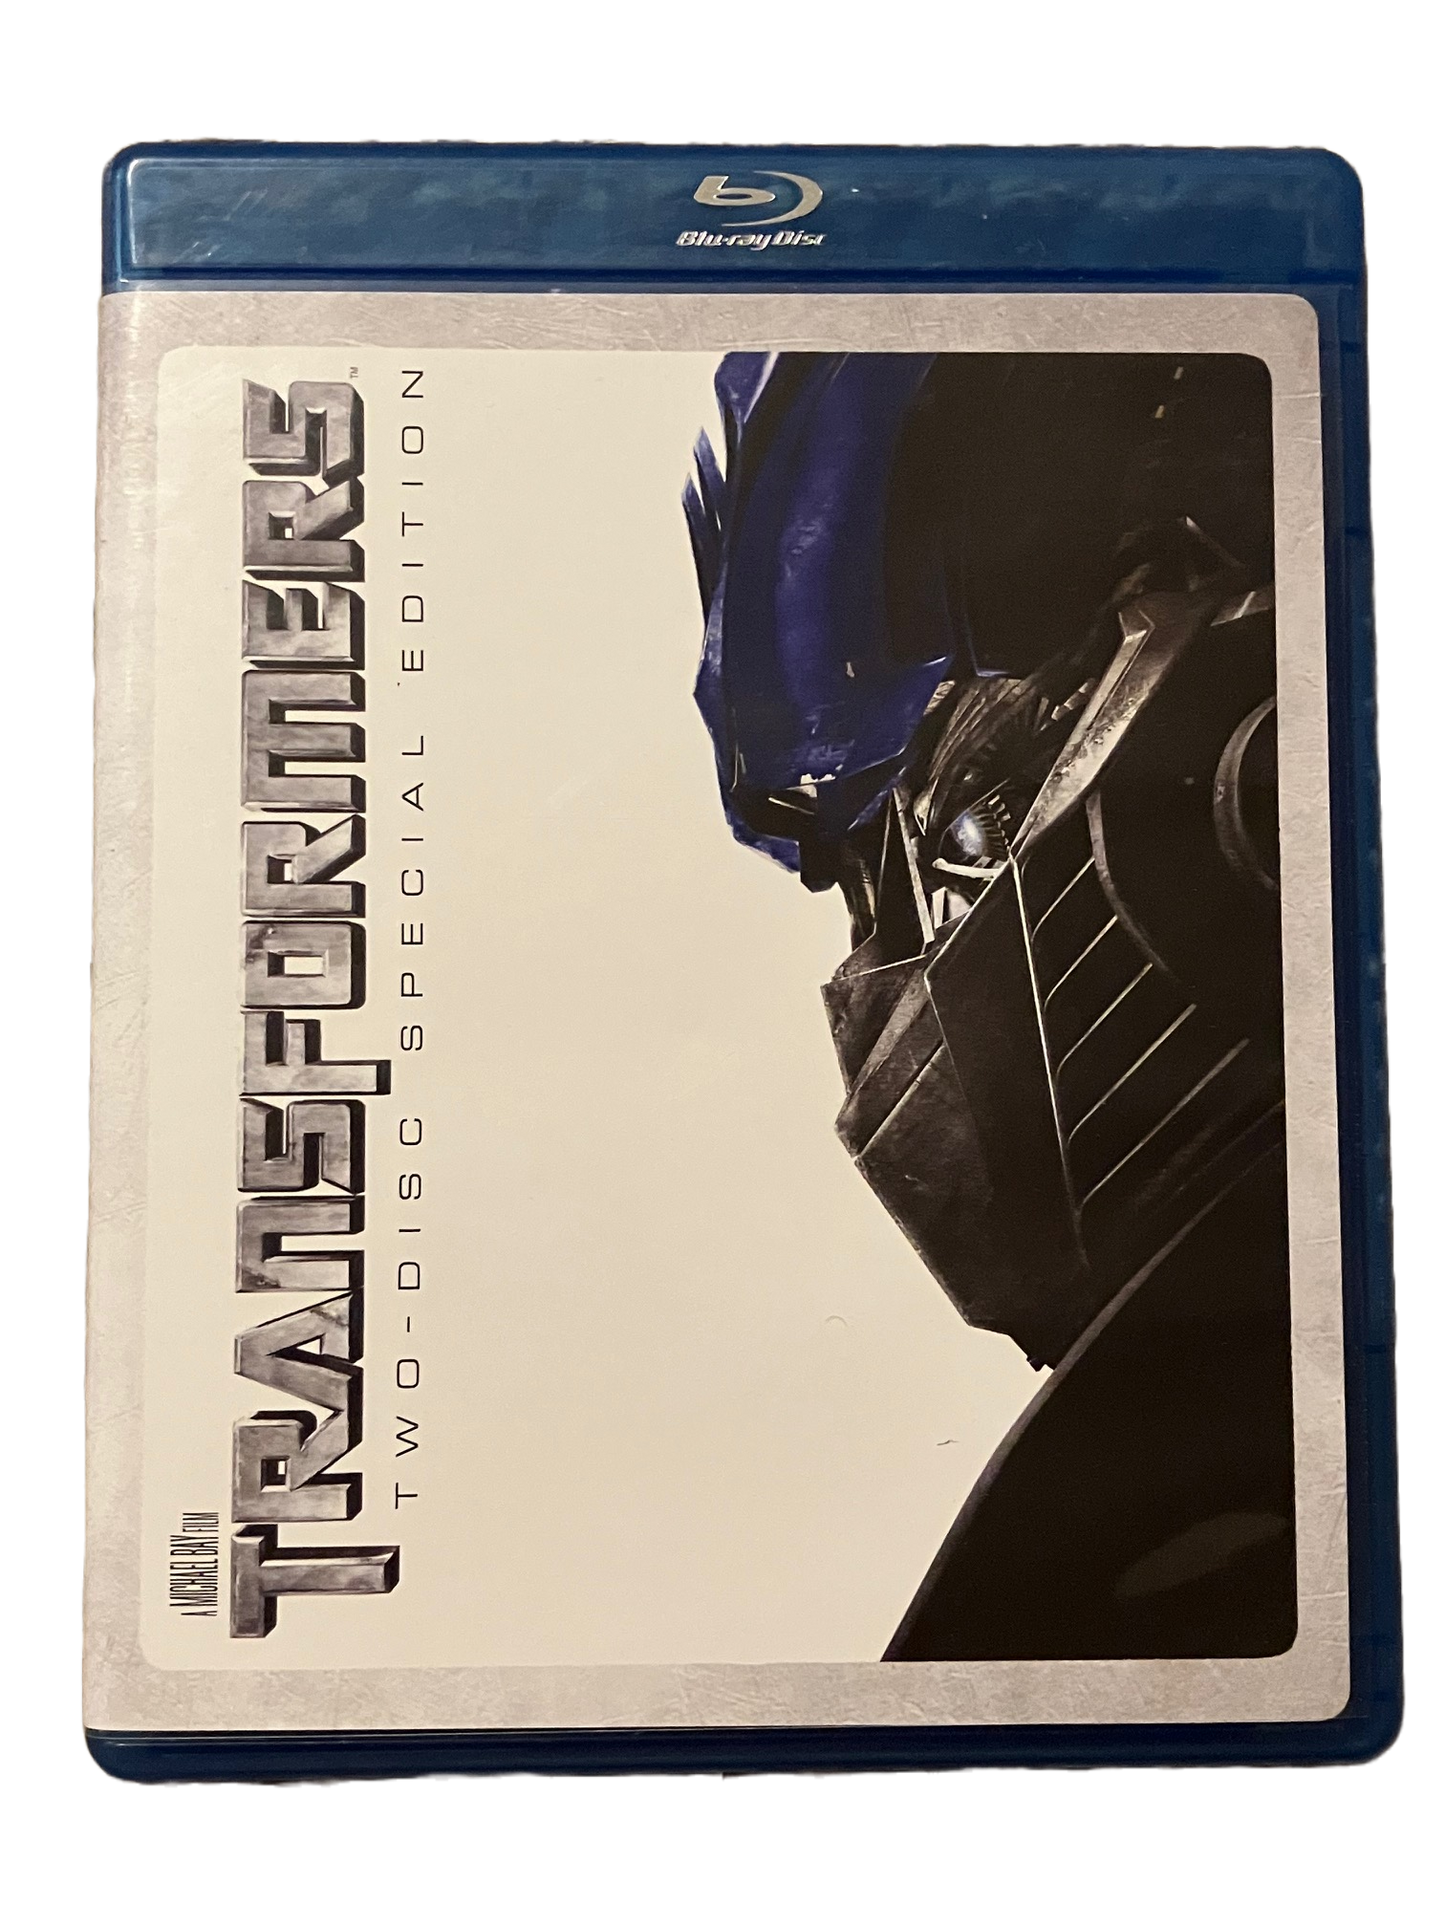 Transformers Used Blu Ray Movie.